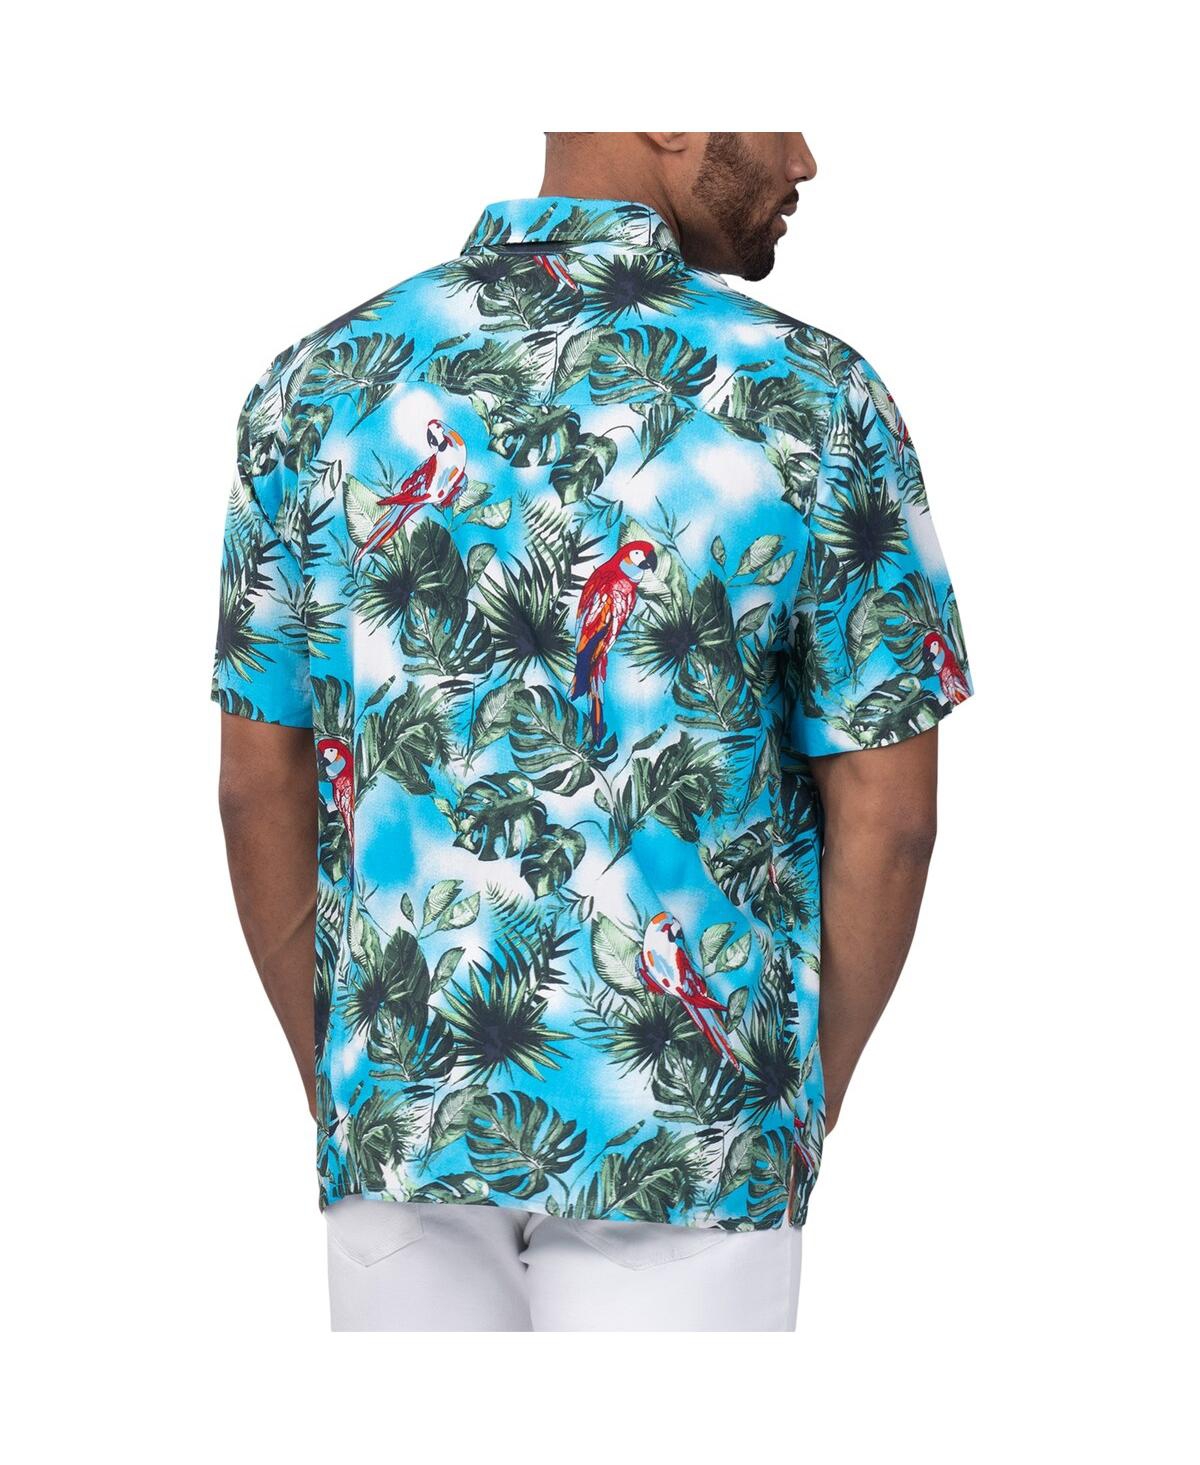 Shop Margaritaville Men's  Light Blue New York Giants Jungle Parrot Party Button-up Shirt